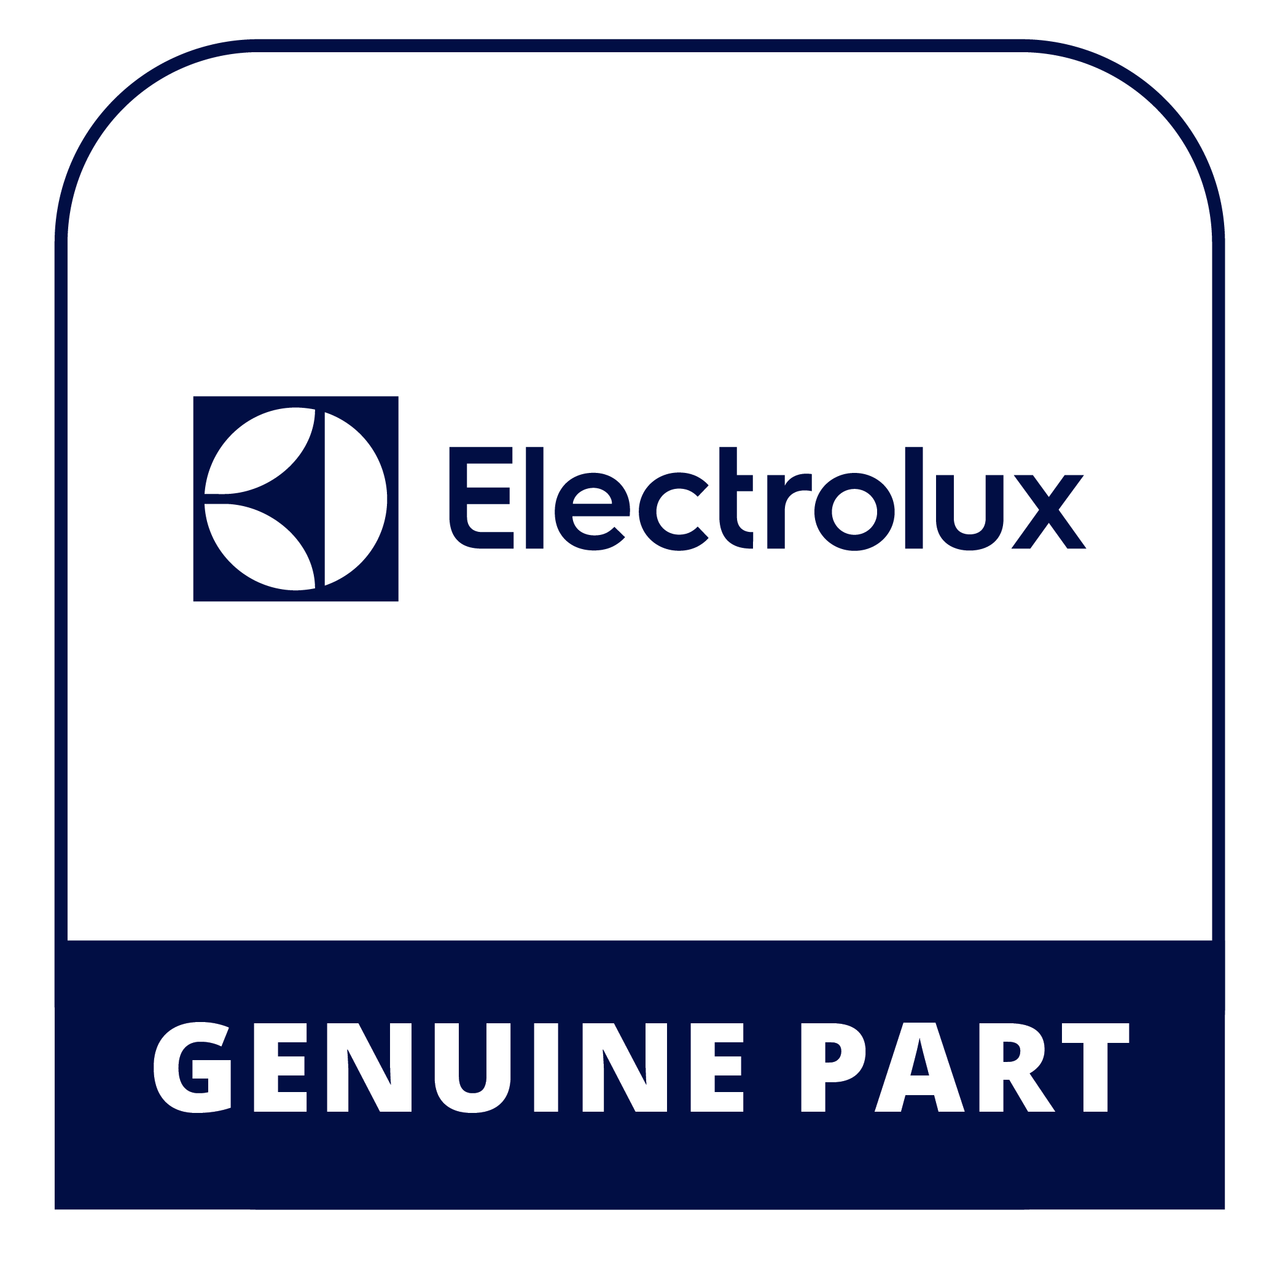 Frigidaire - Electrolux 5304520023 Wrapper - Genuine Electrolux Part